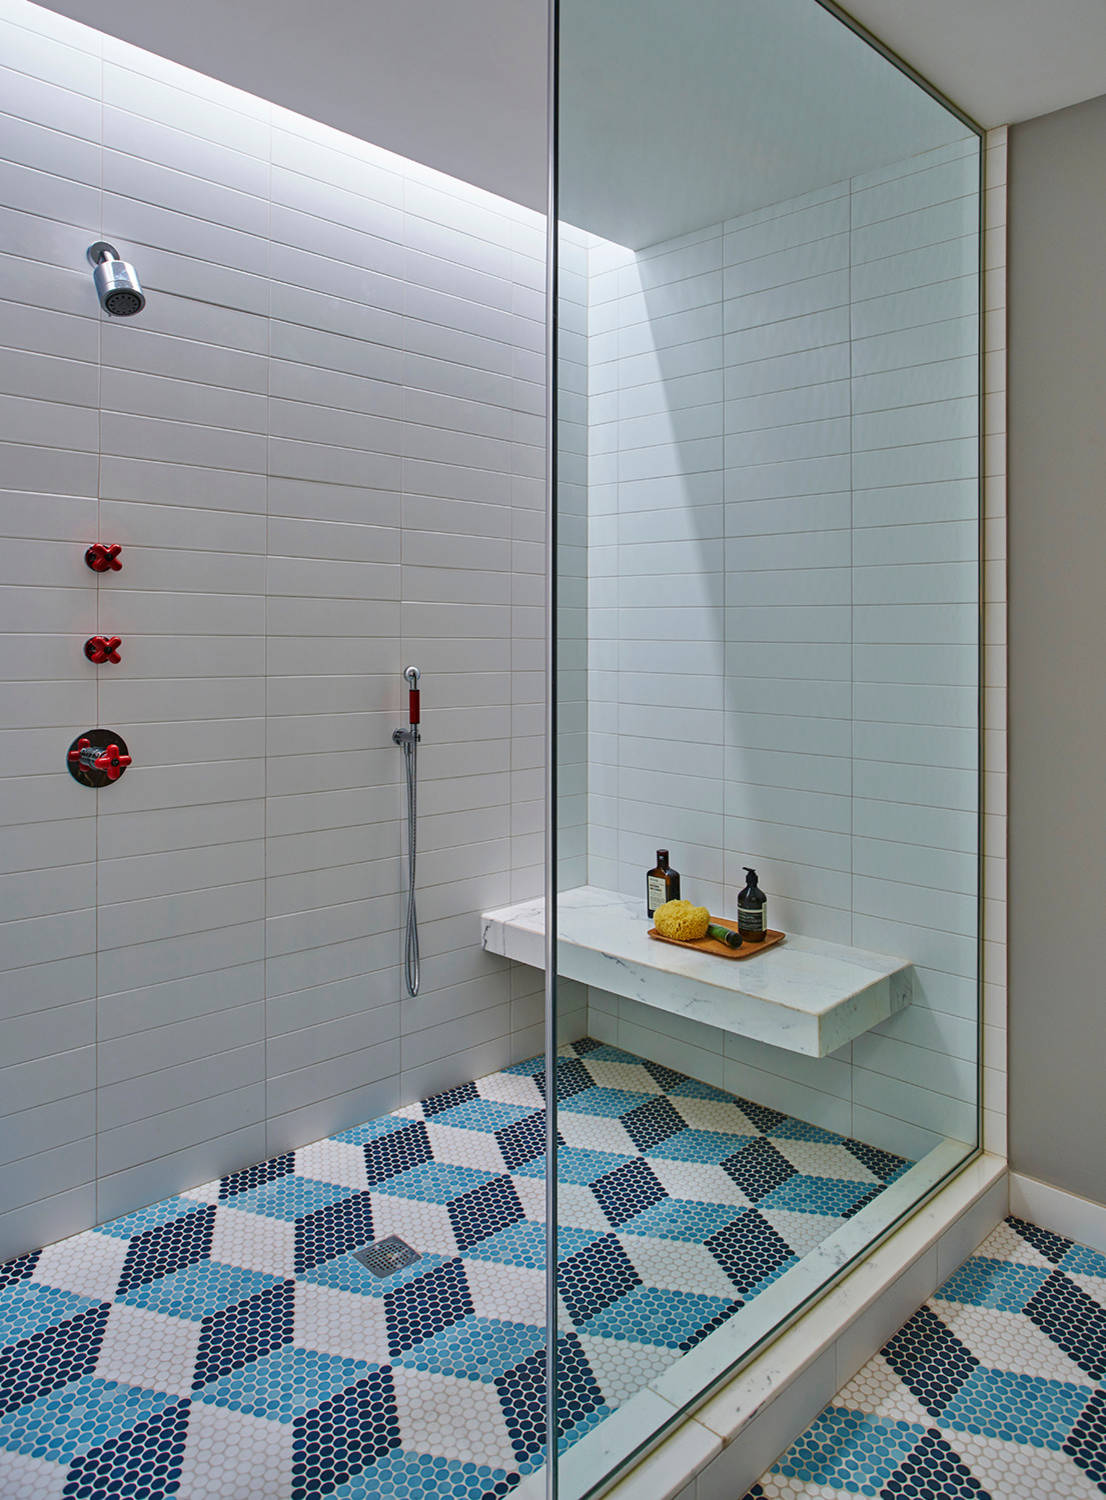 75 Beautiful Mosaic Tile Floor Bathroom, Mosaic Bathroom Floor Tile